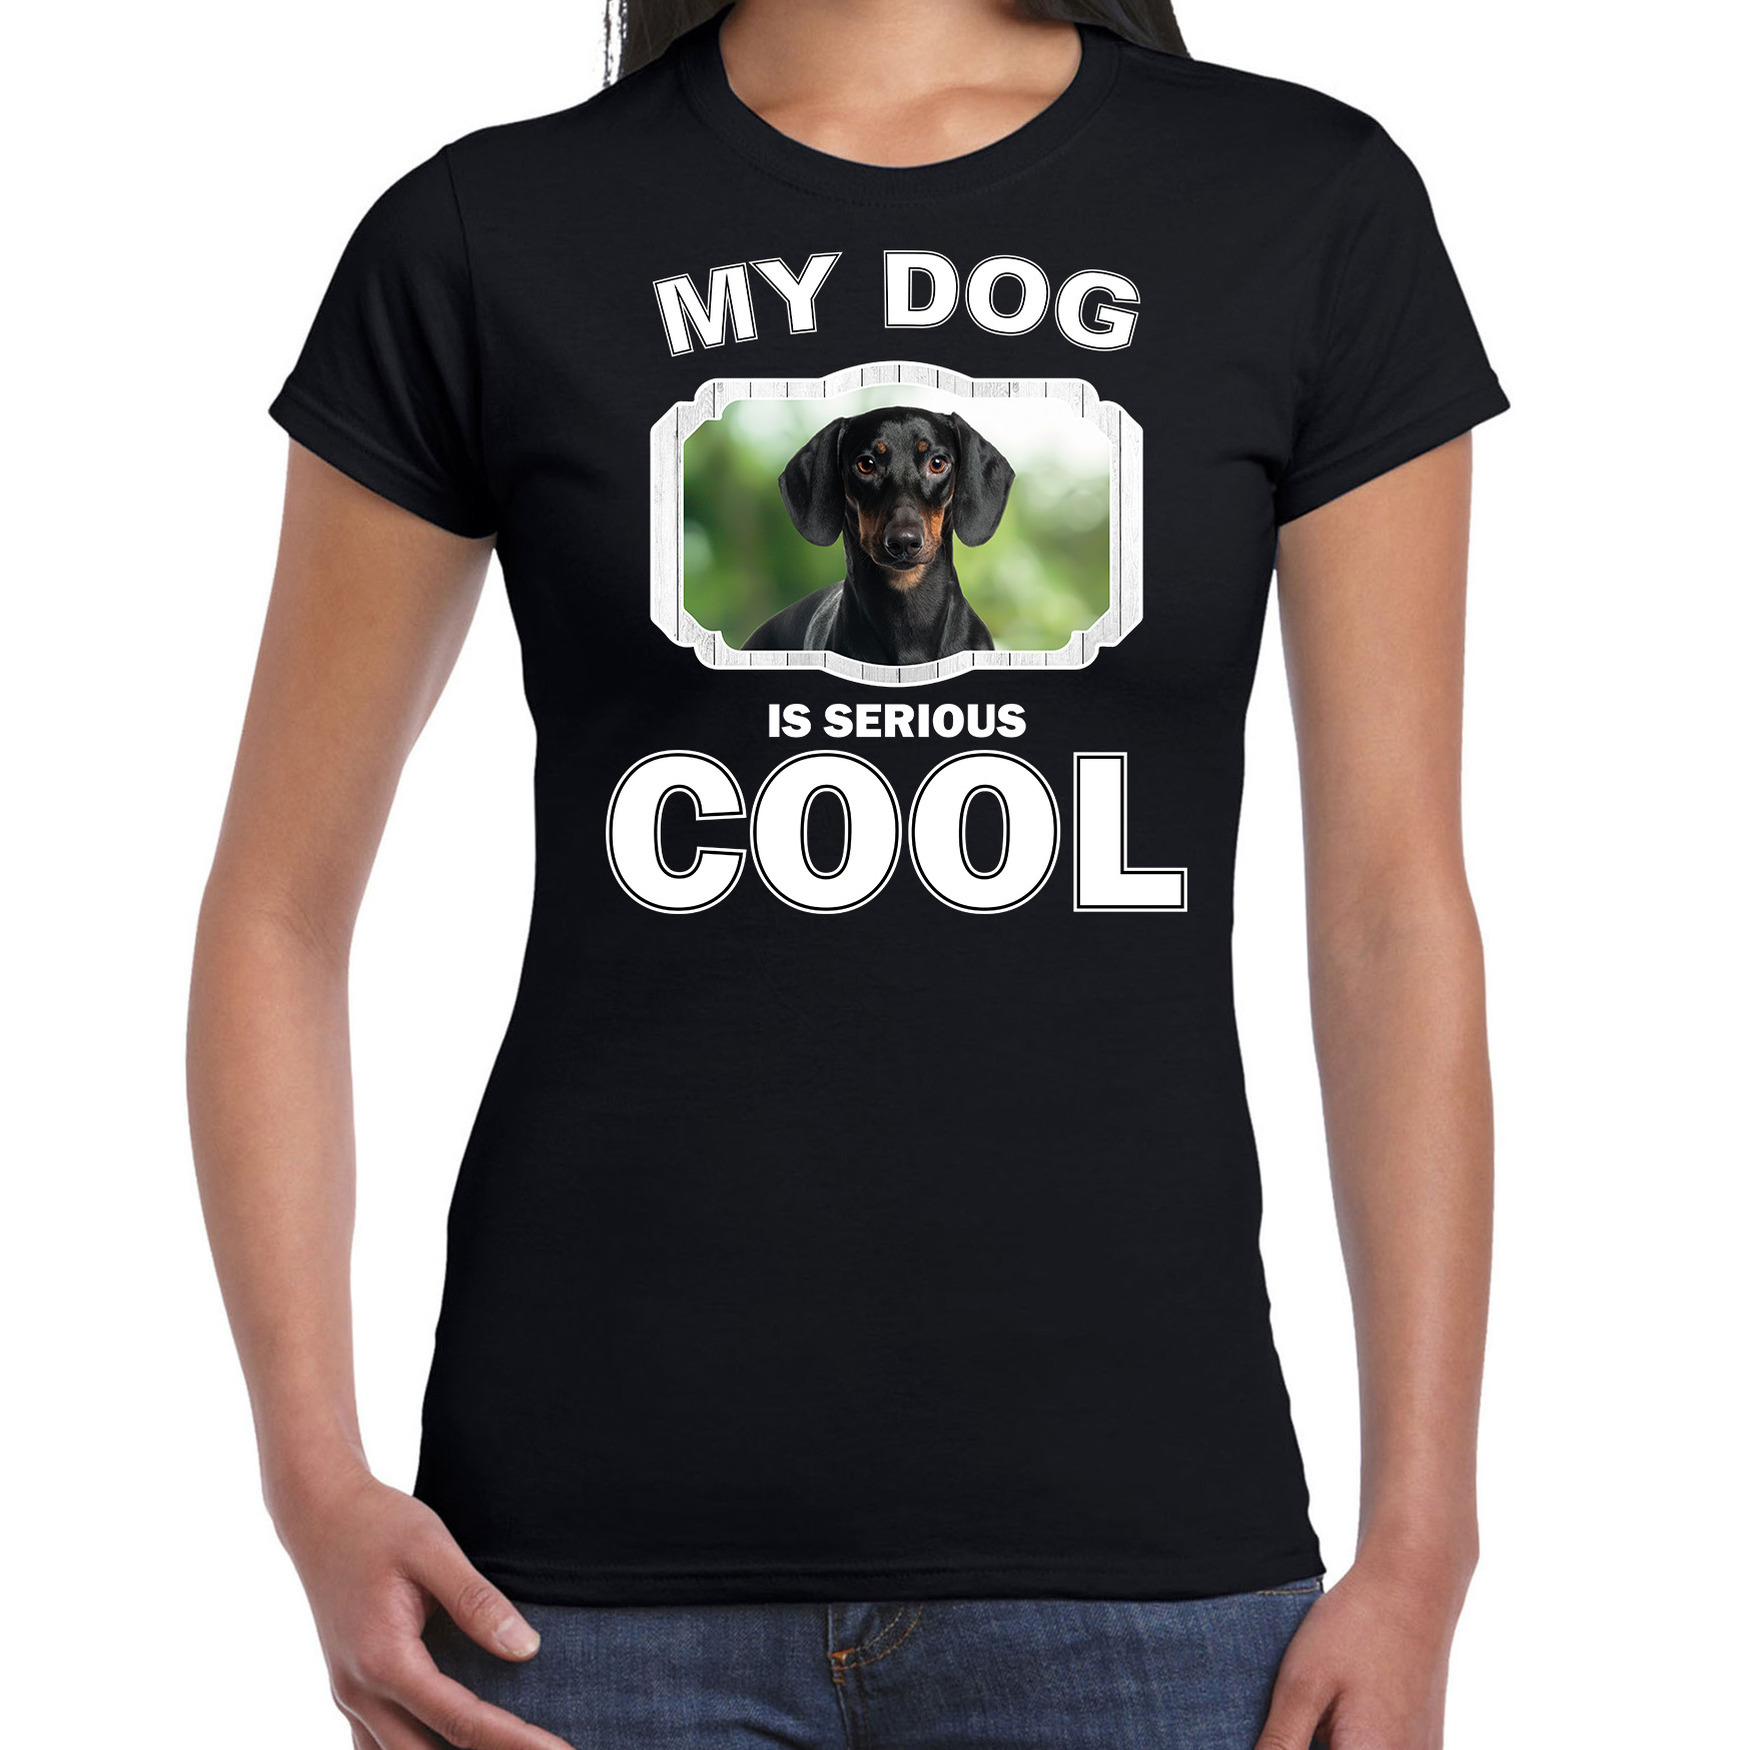 Coole teckels honden t-shirt my dog is serious cool zwart voor dames